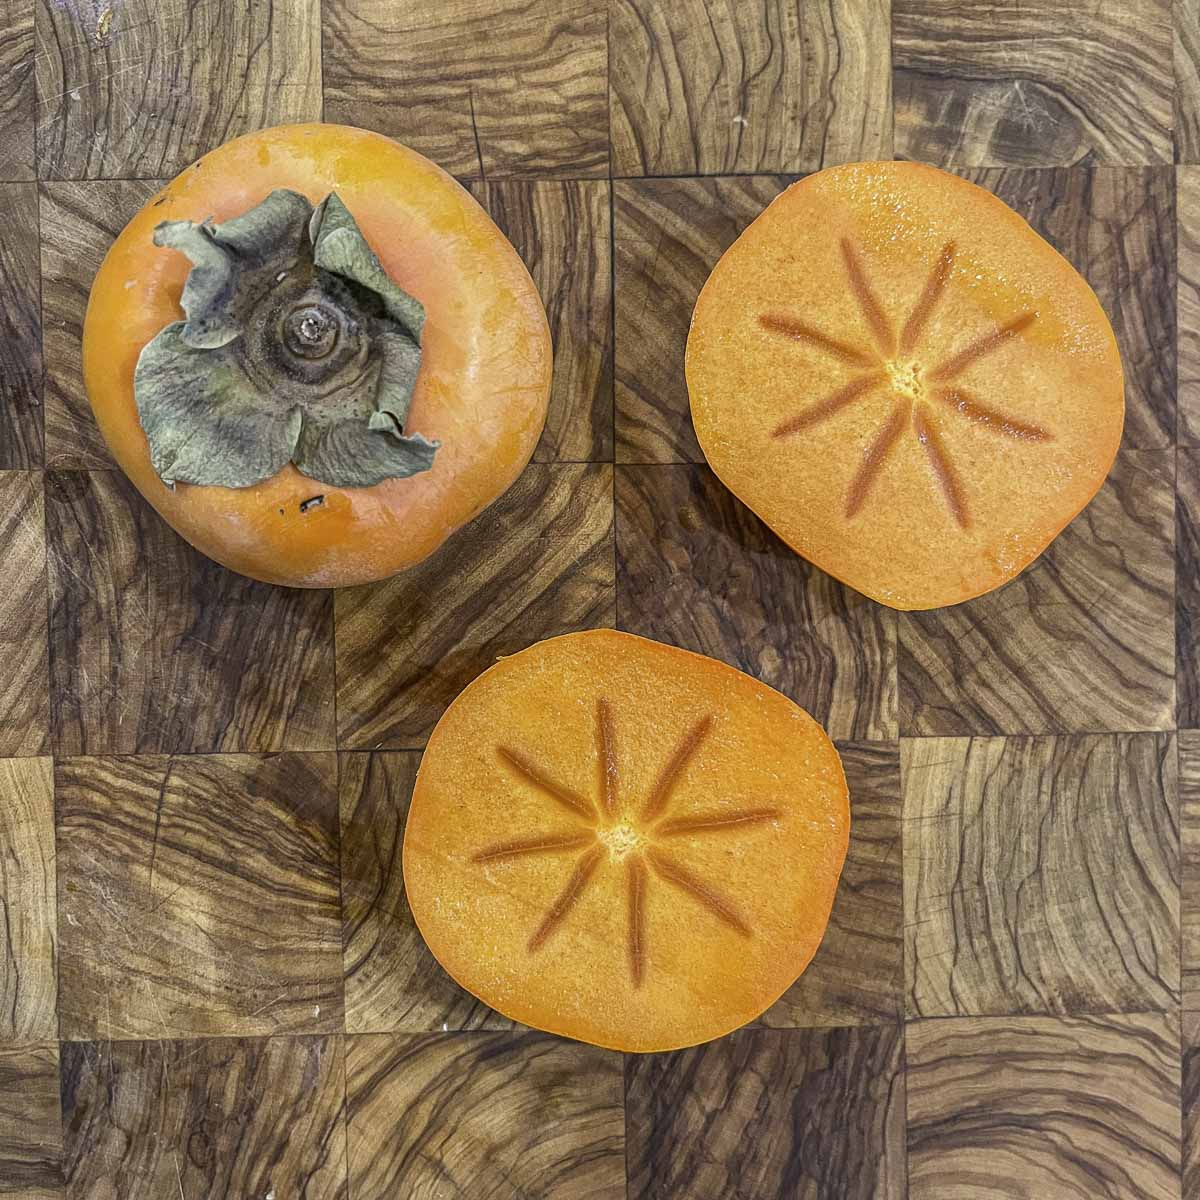 fuyu persimmons sliced in half